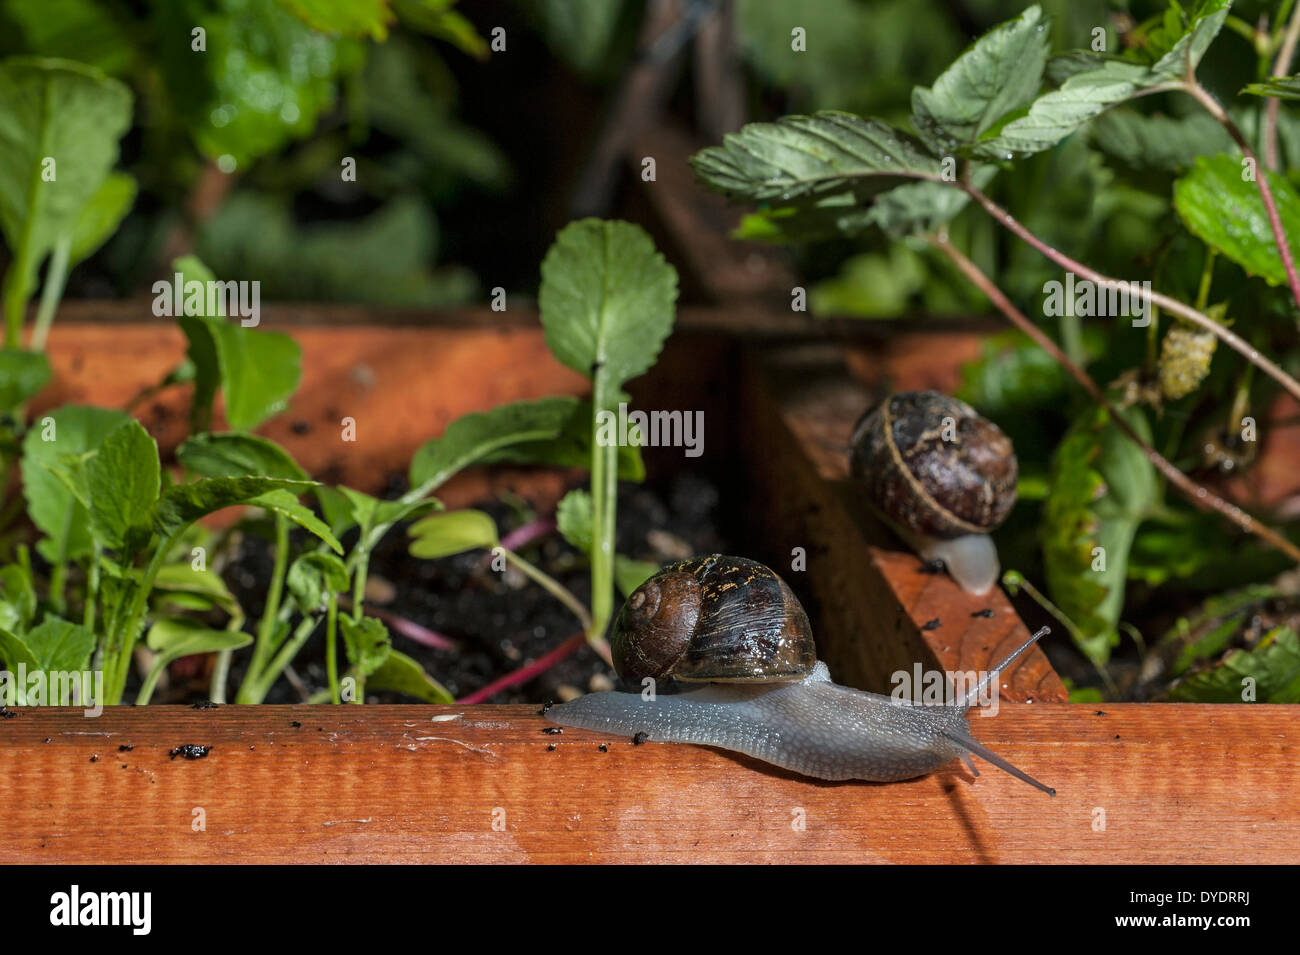 Common garden snails (Helix aspersa / Cornu aspersum / Cryptomphalus aspersus) raiding vegetable garden at night Stock Photo